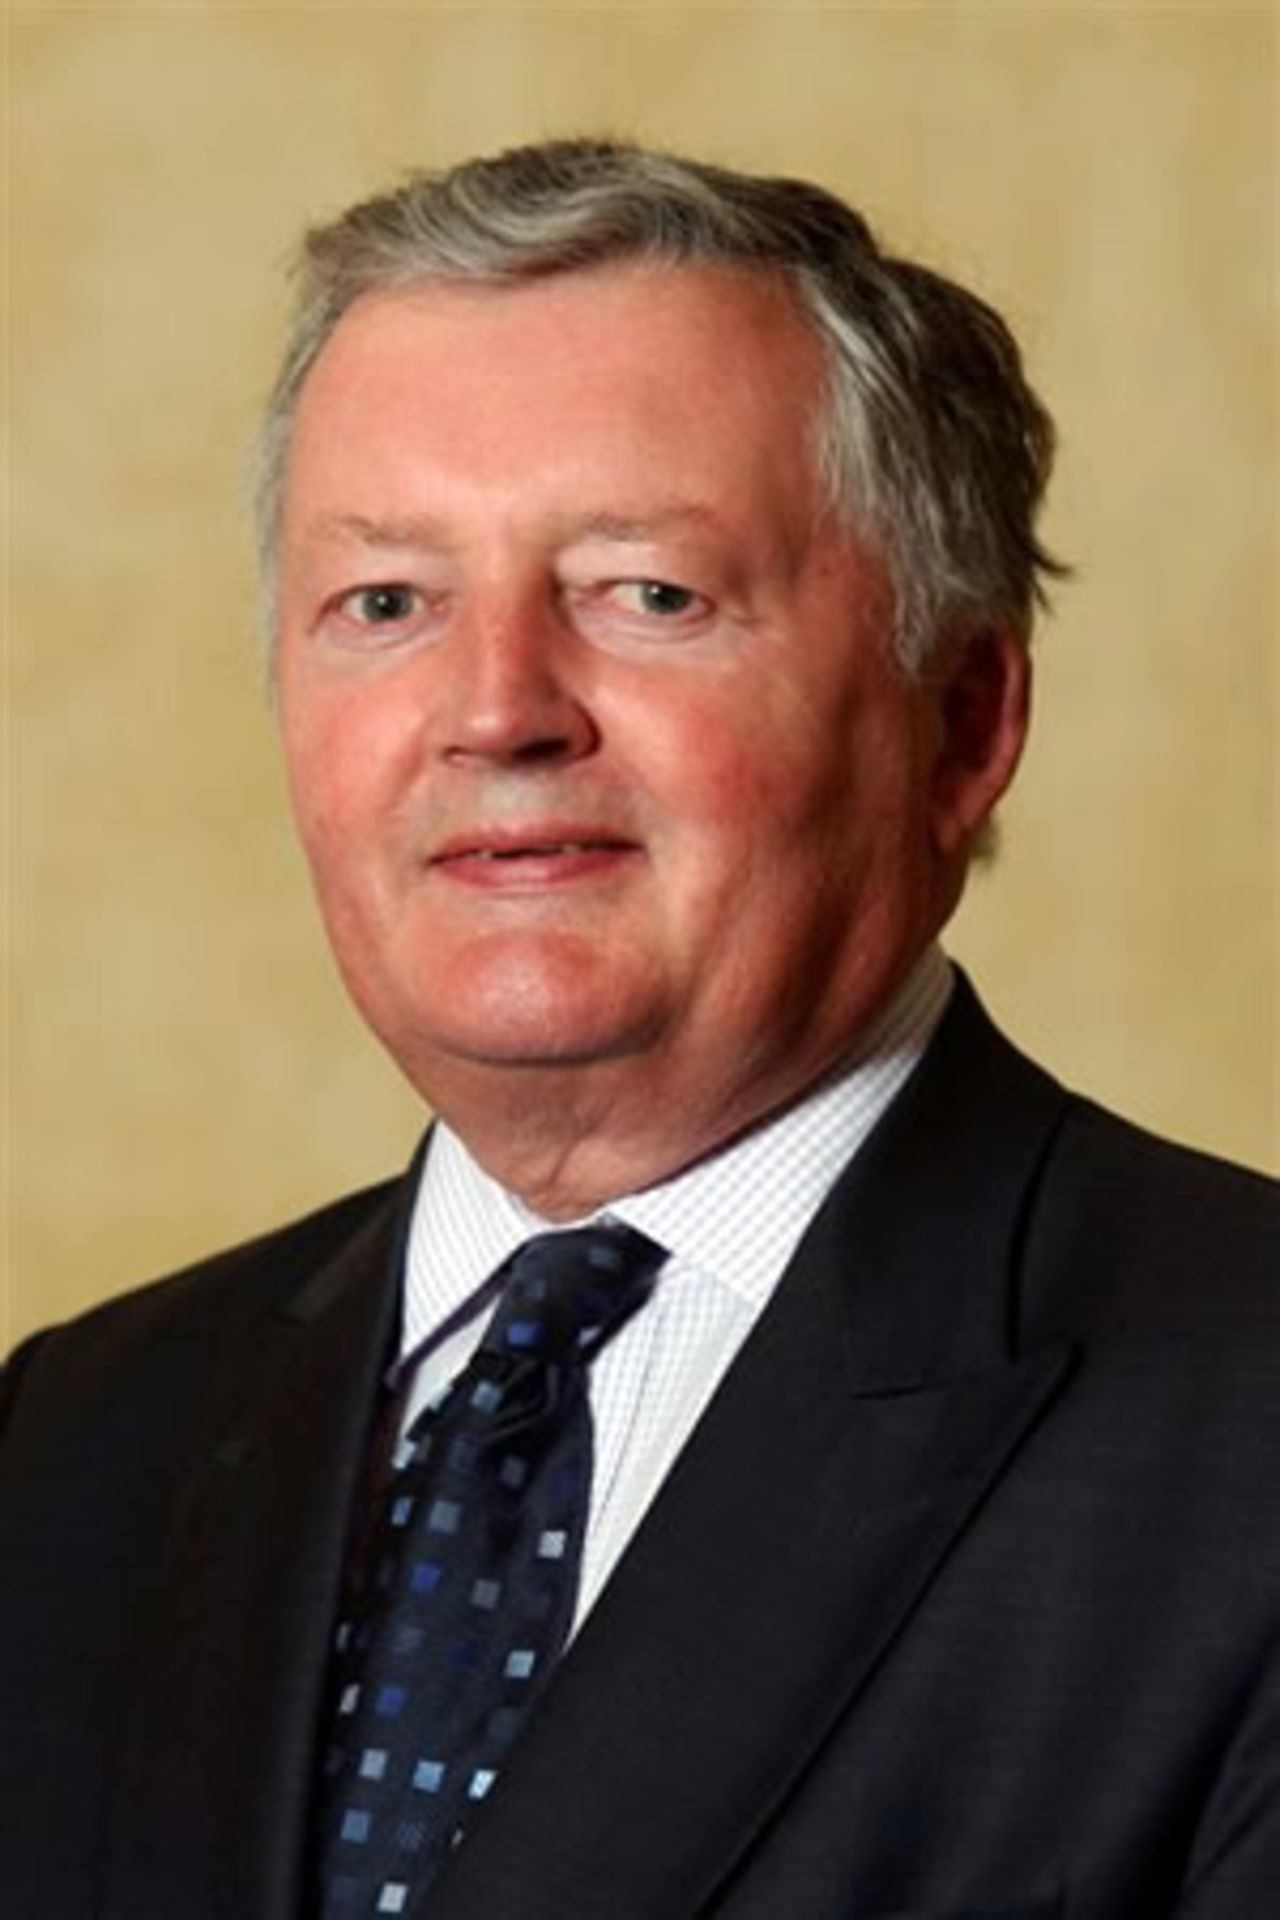 David Morgan - Chairman, England & Wales Cricket Board